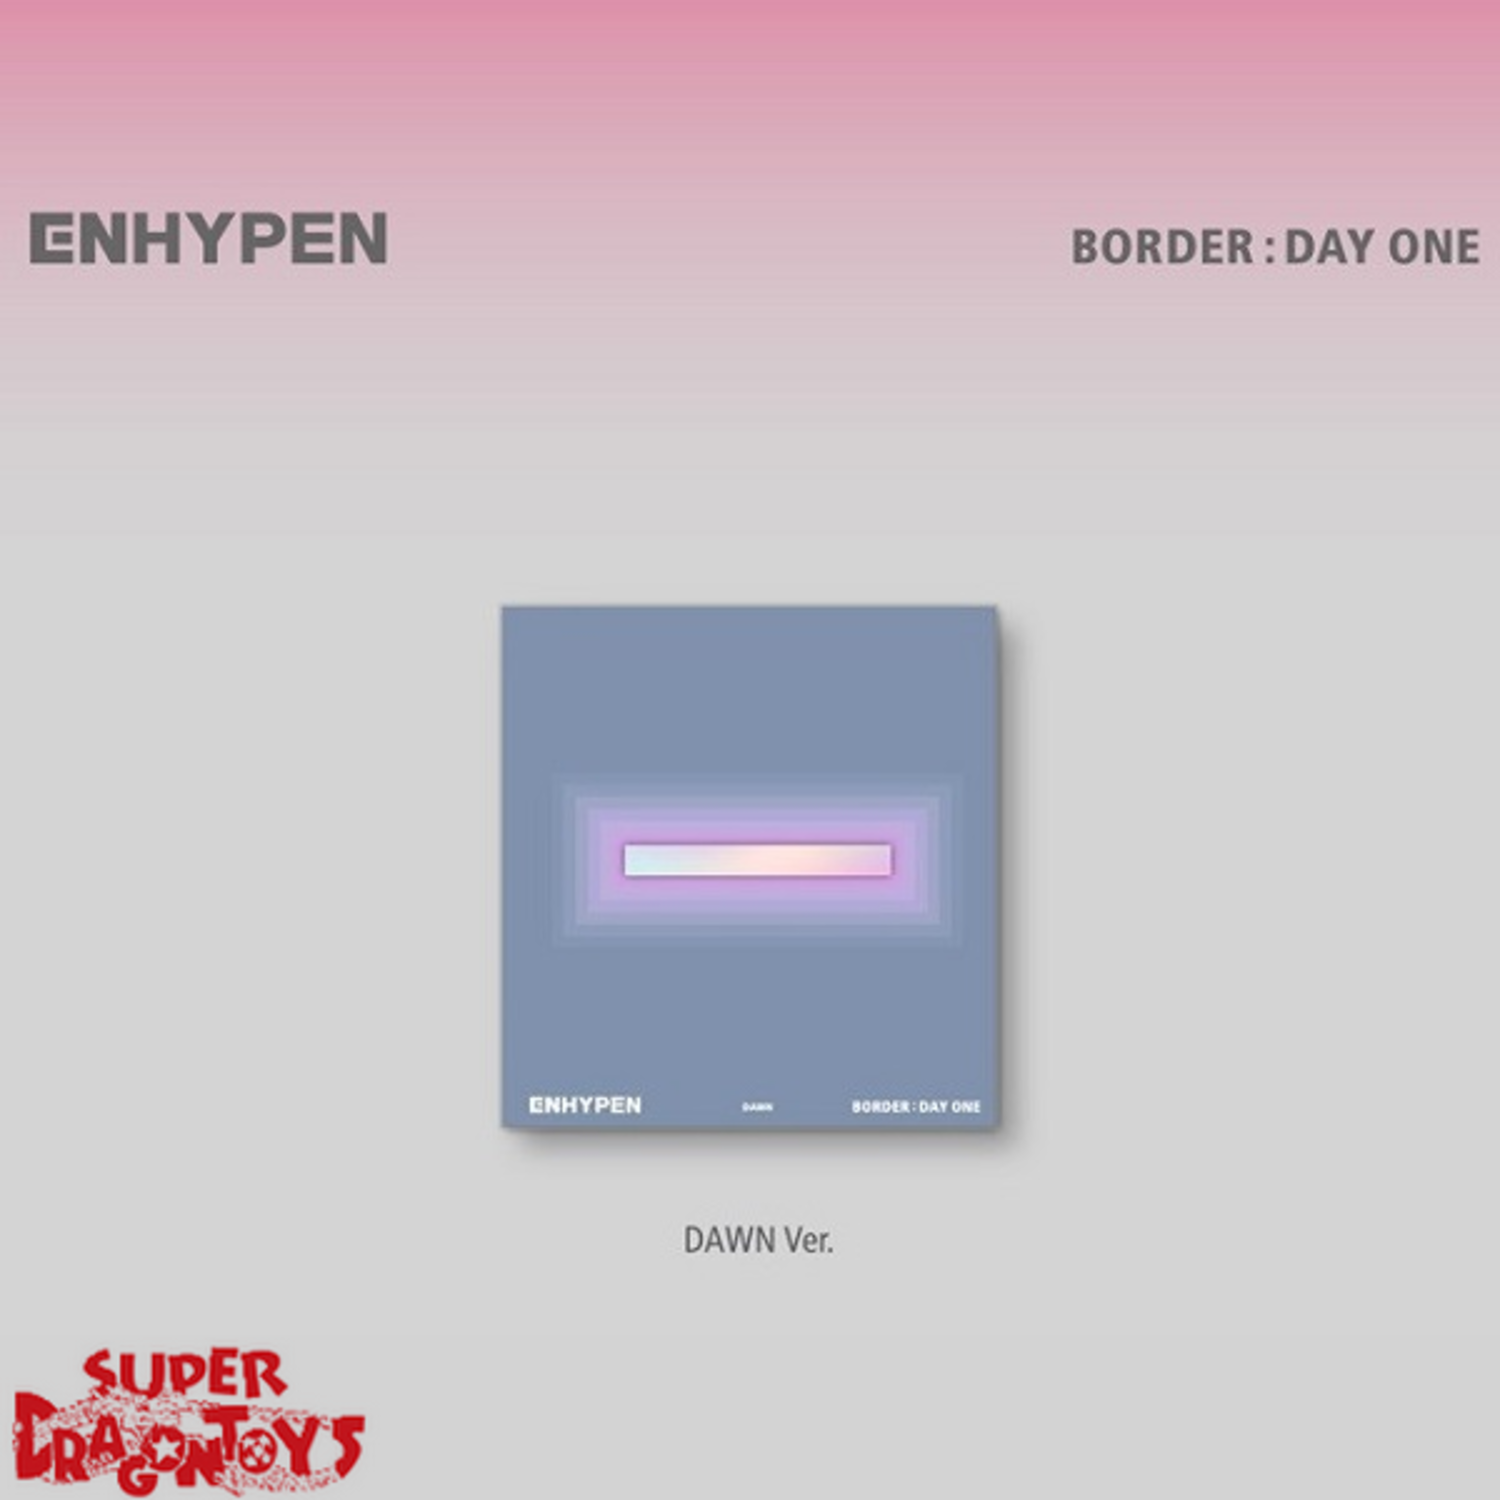 ENHYPEN (엔하이픈) - BORDER : DAY ONE - DEBUT ALBUM - SUPERDRAGONTOYS